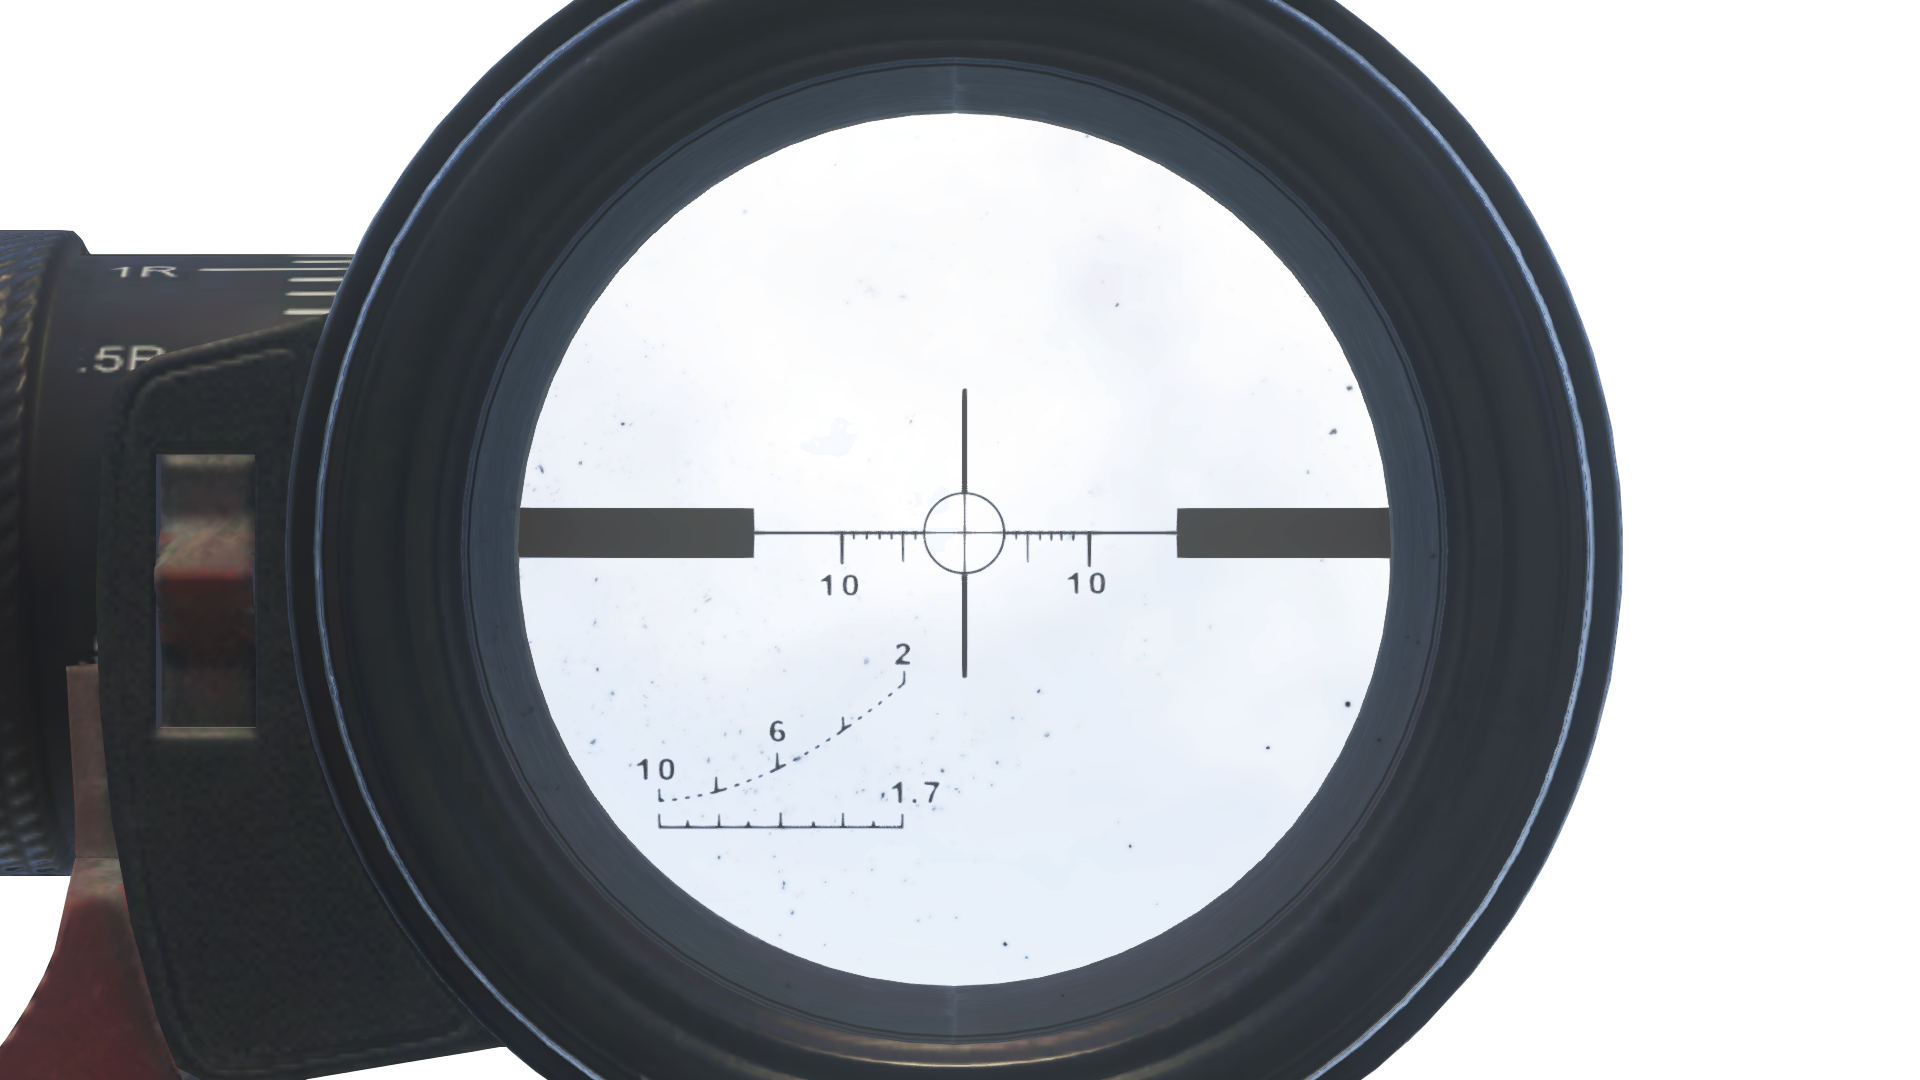 image lynx scope overlay call duty wiki wikia #34876